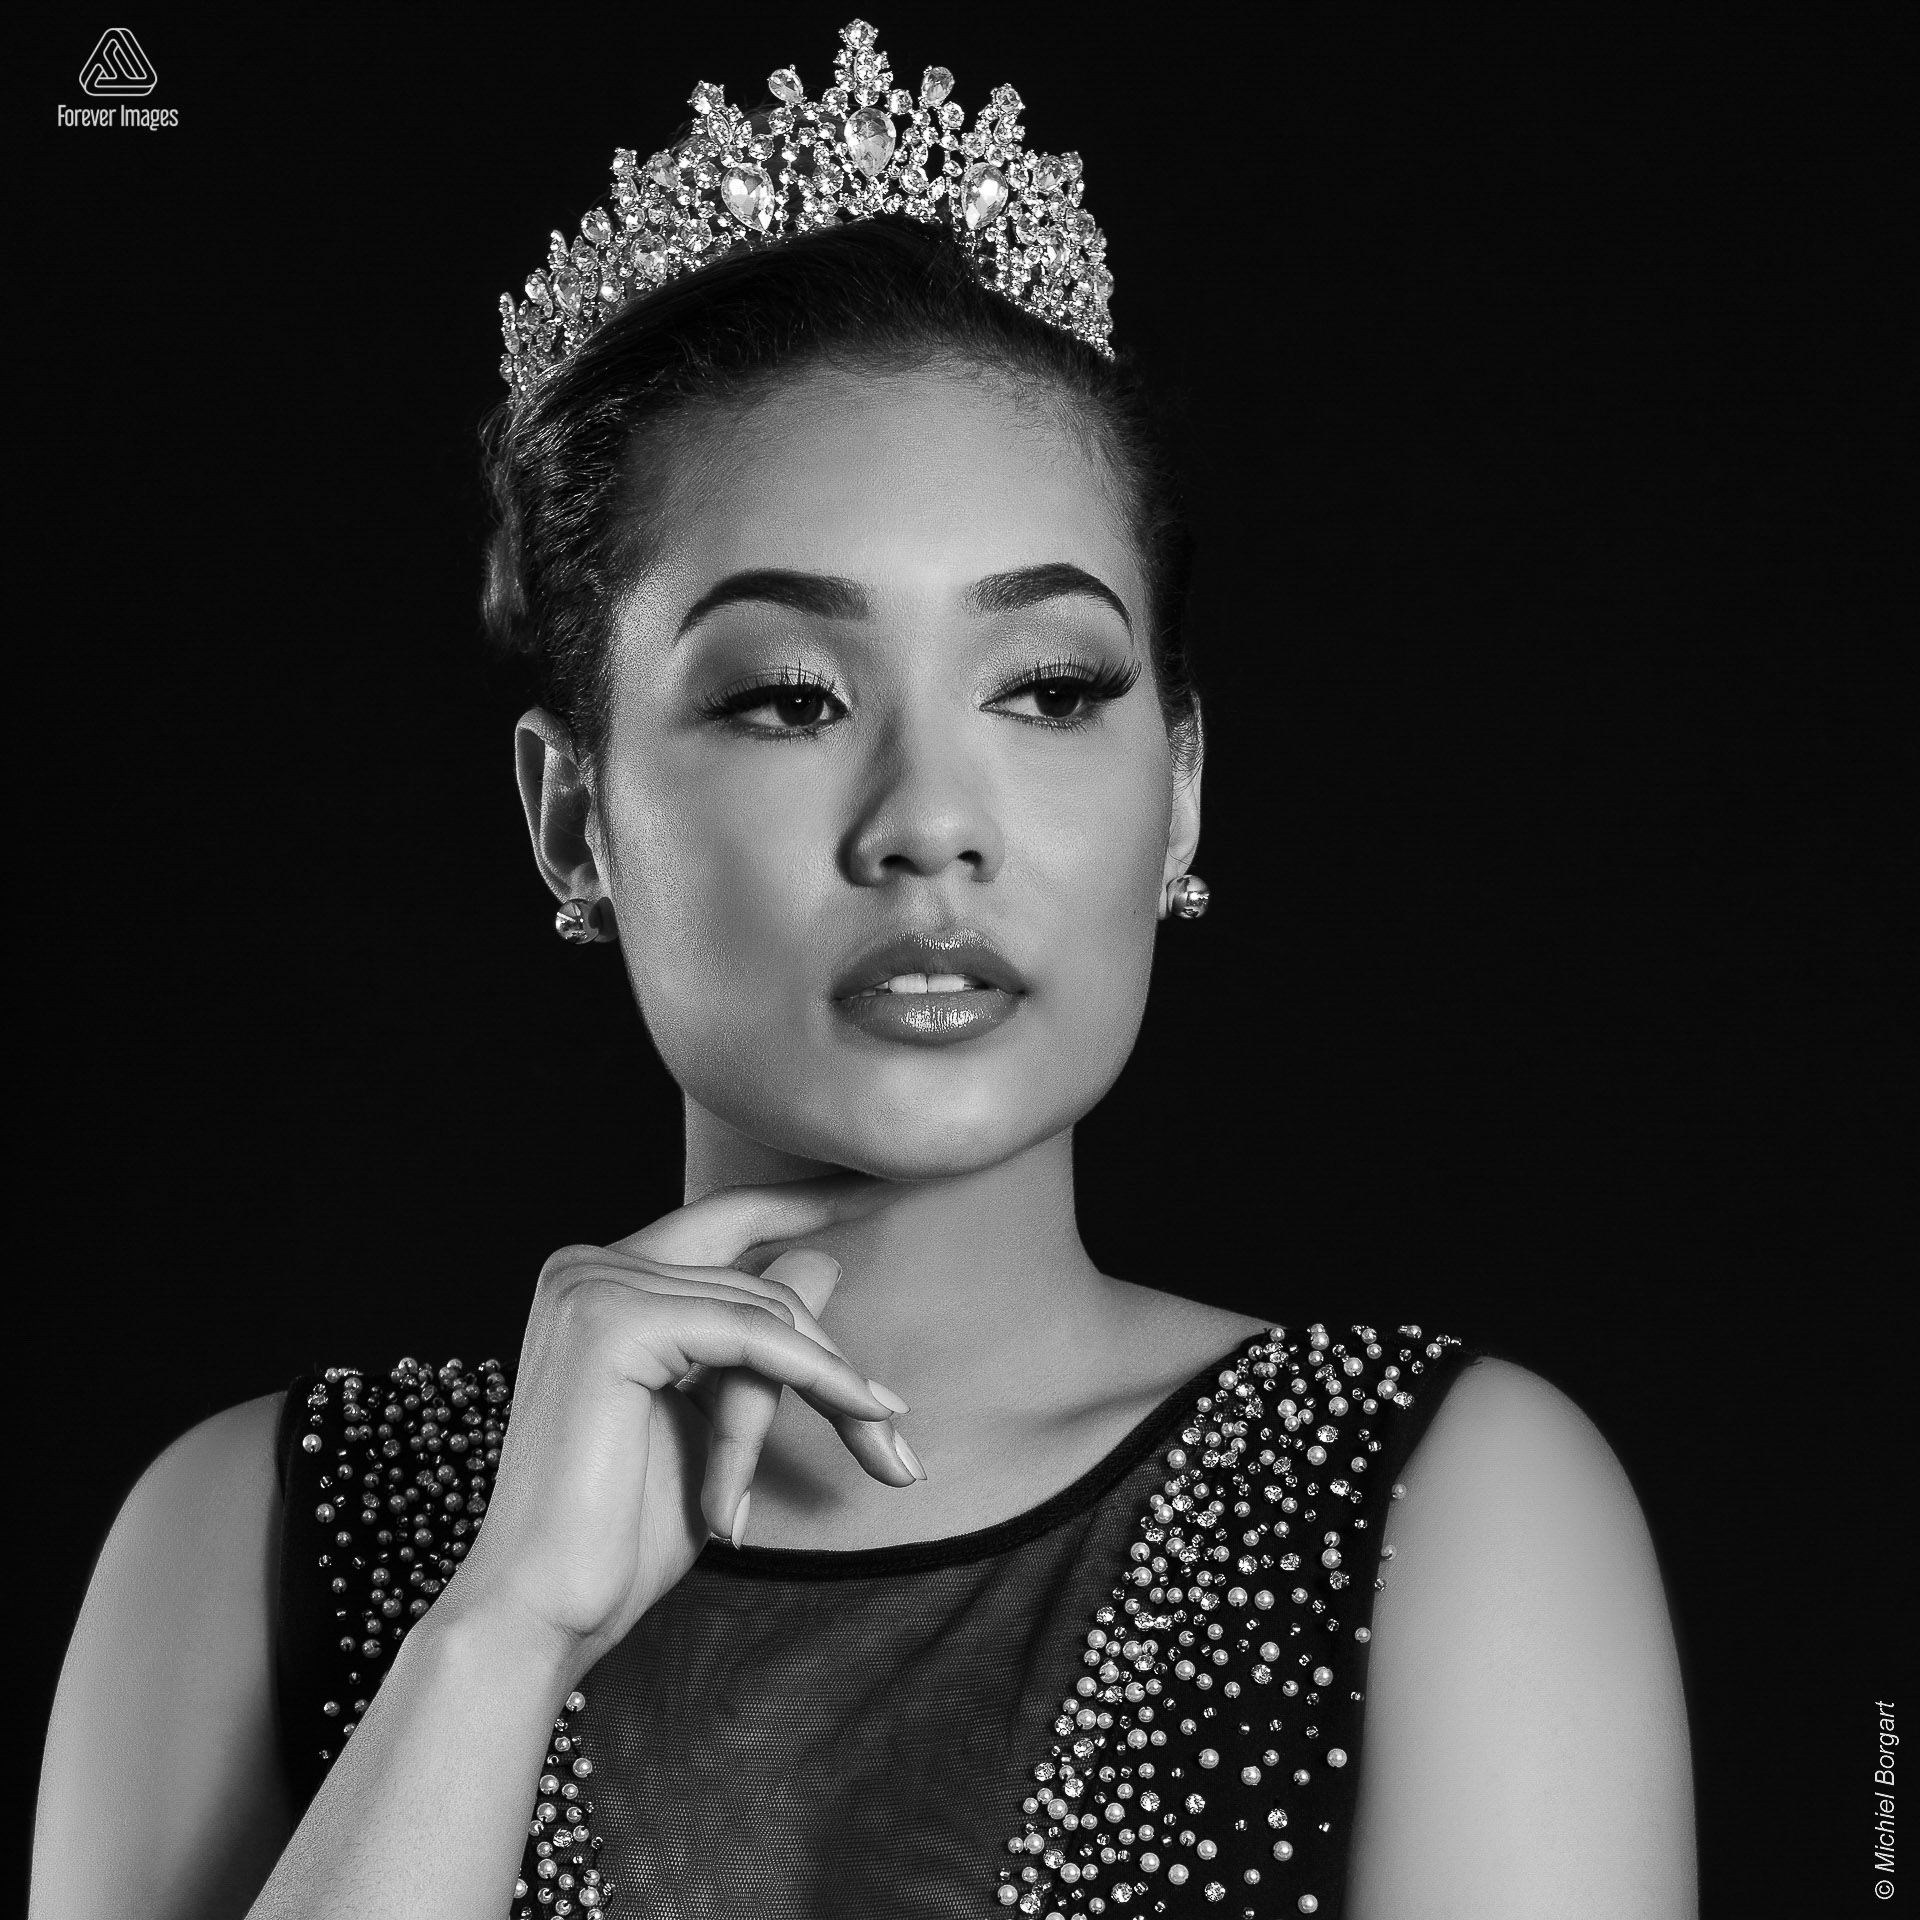 Fashion photo black and white cocktail dress pearl crown | Jaimerlee de Meza Miss Eco Aruba Vicky Foundation | Fashion Photographer Michiel Borgart - Forever Images.